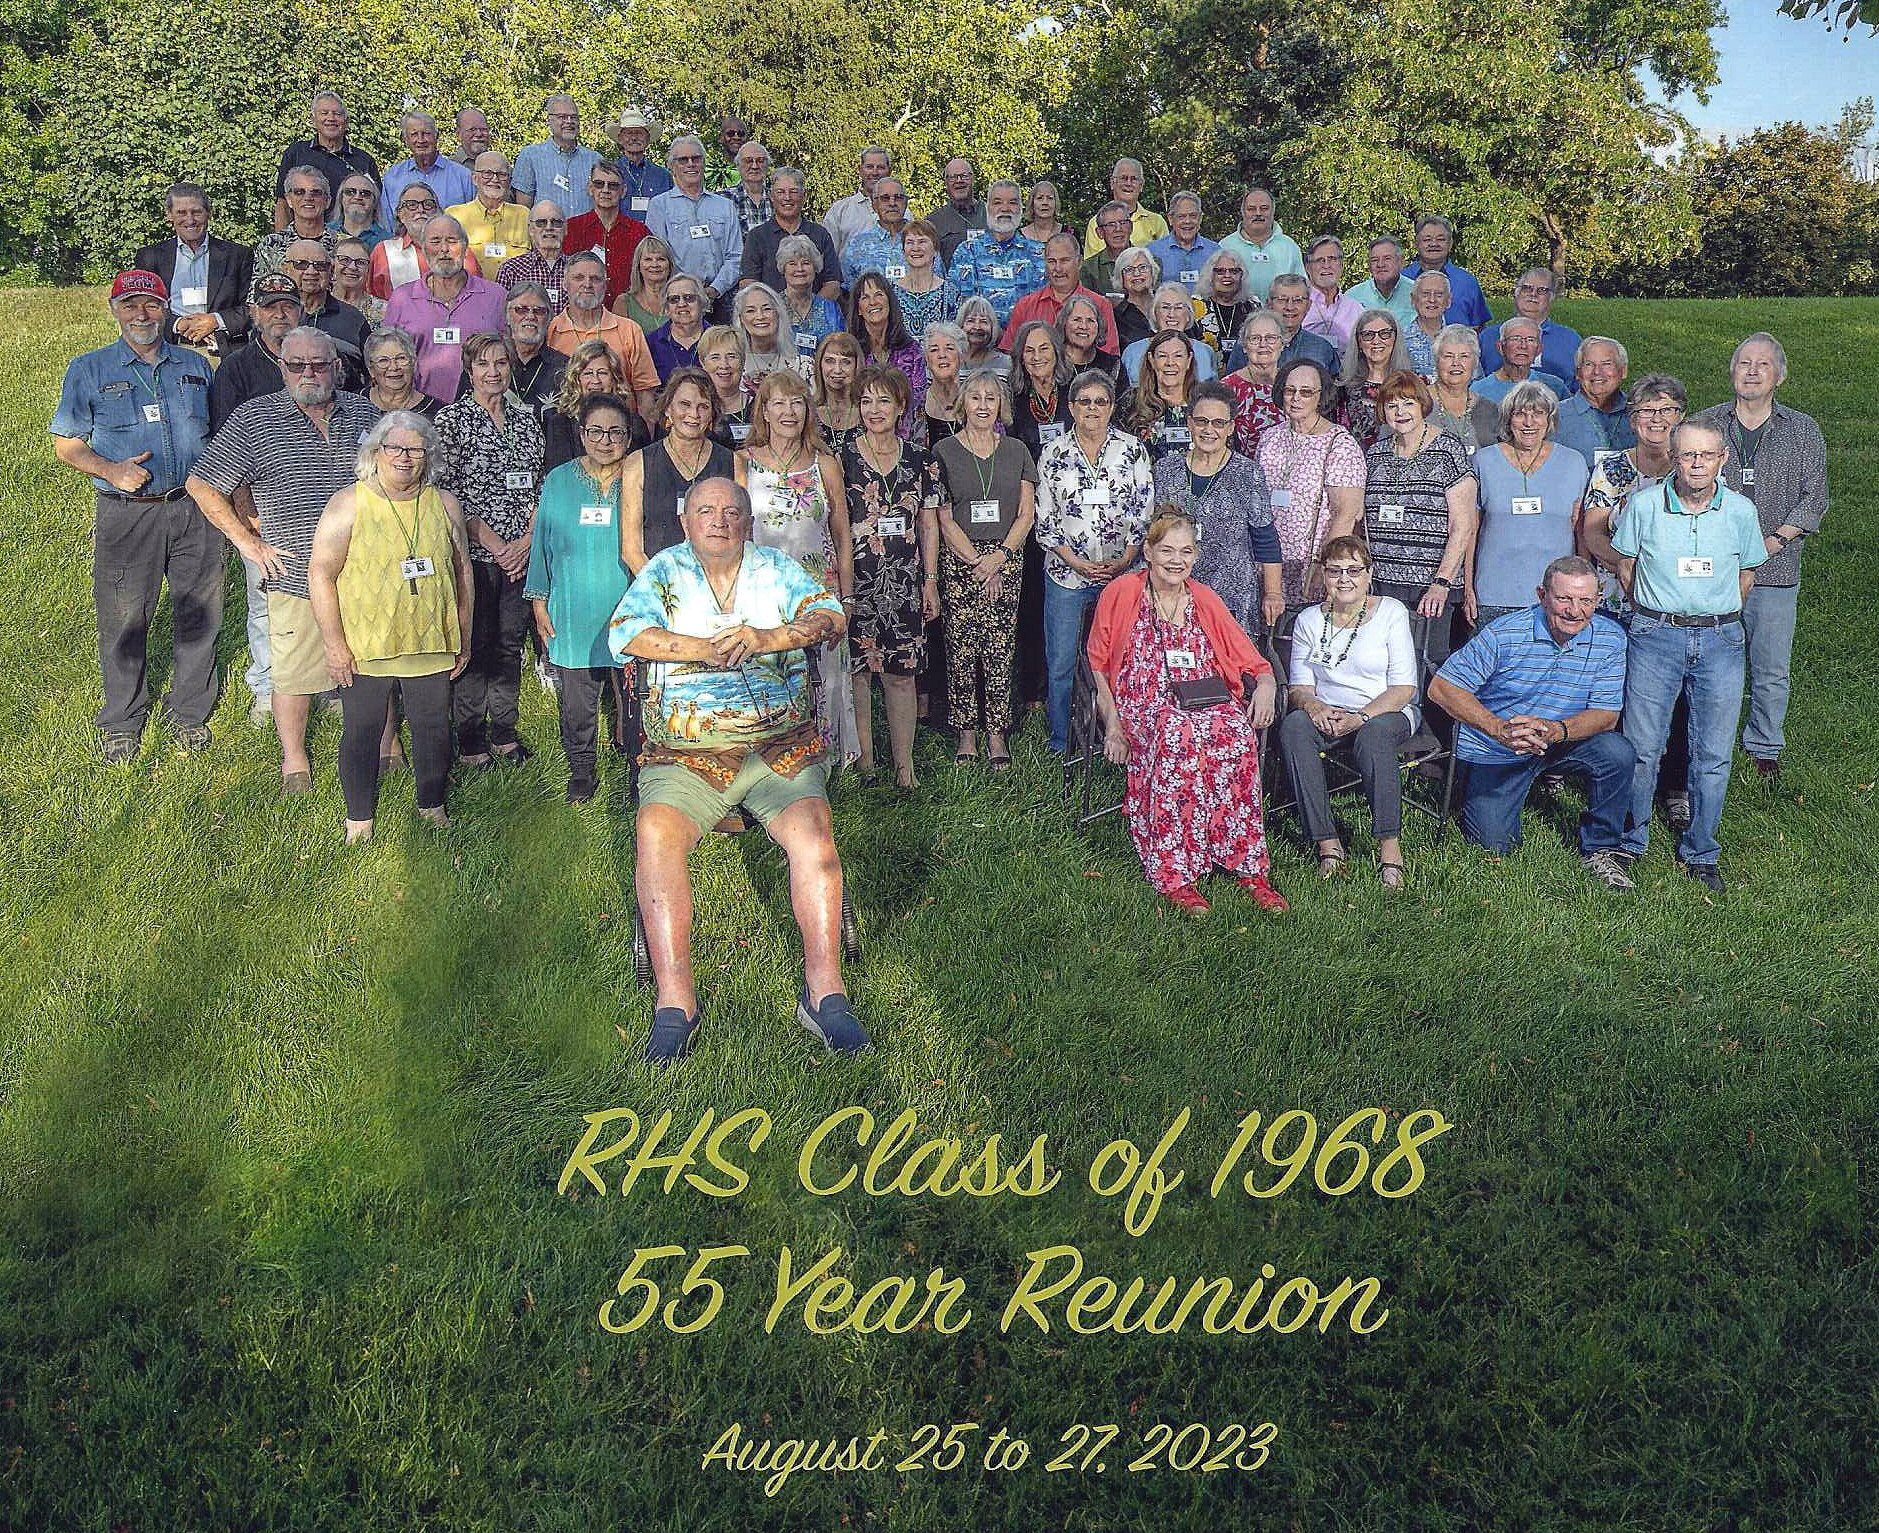 55 year group reunion photo